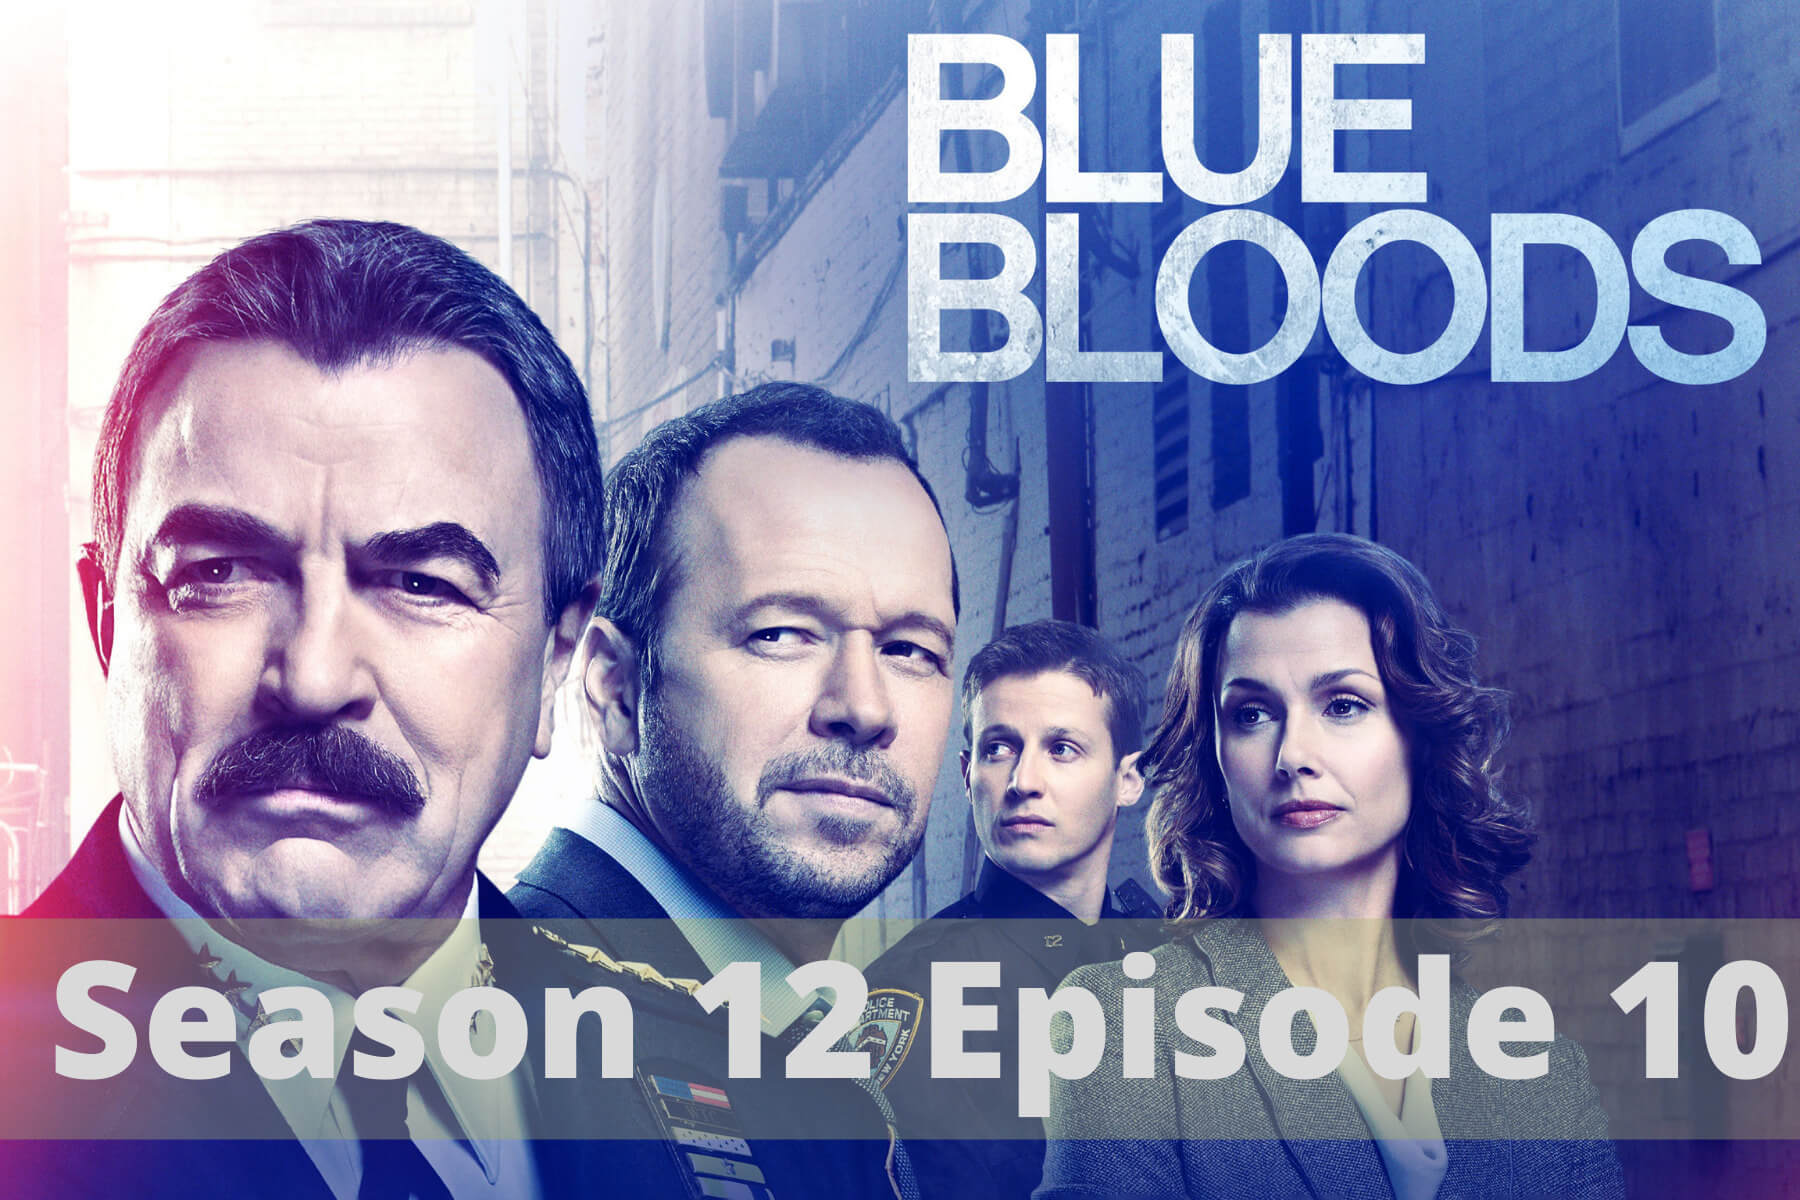 blue bloods Season 12 Episode 10